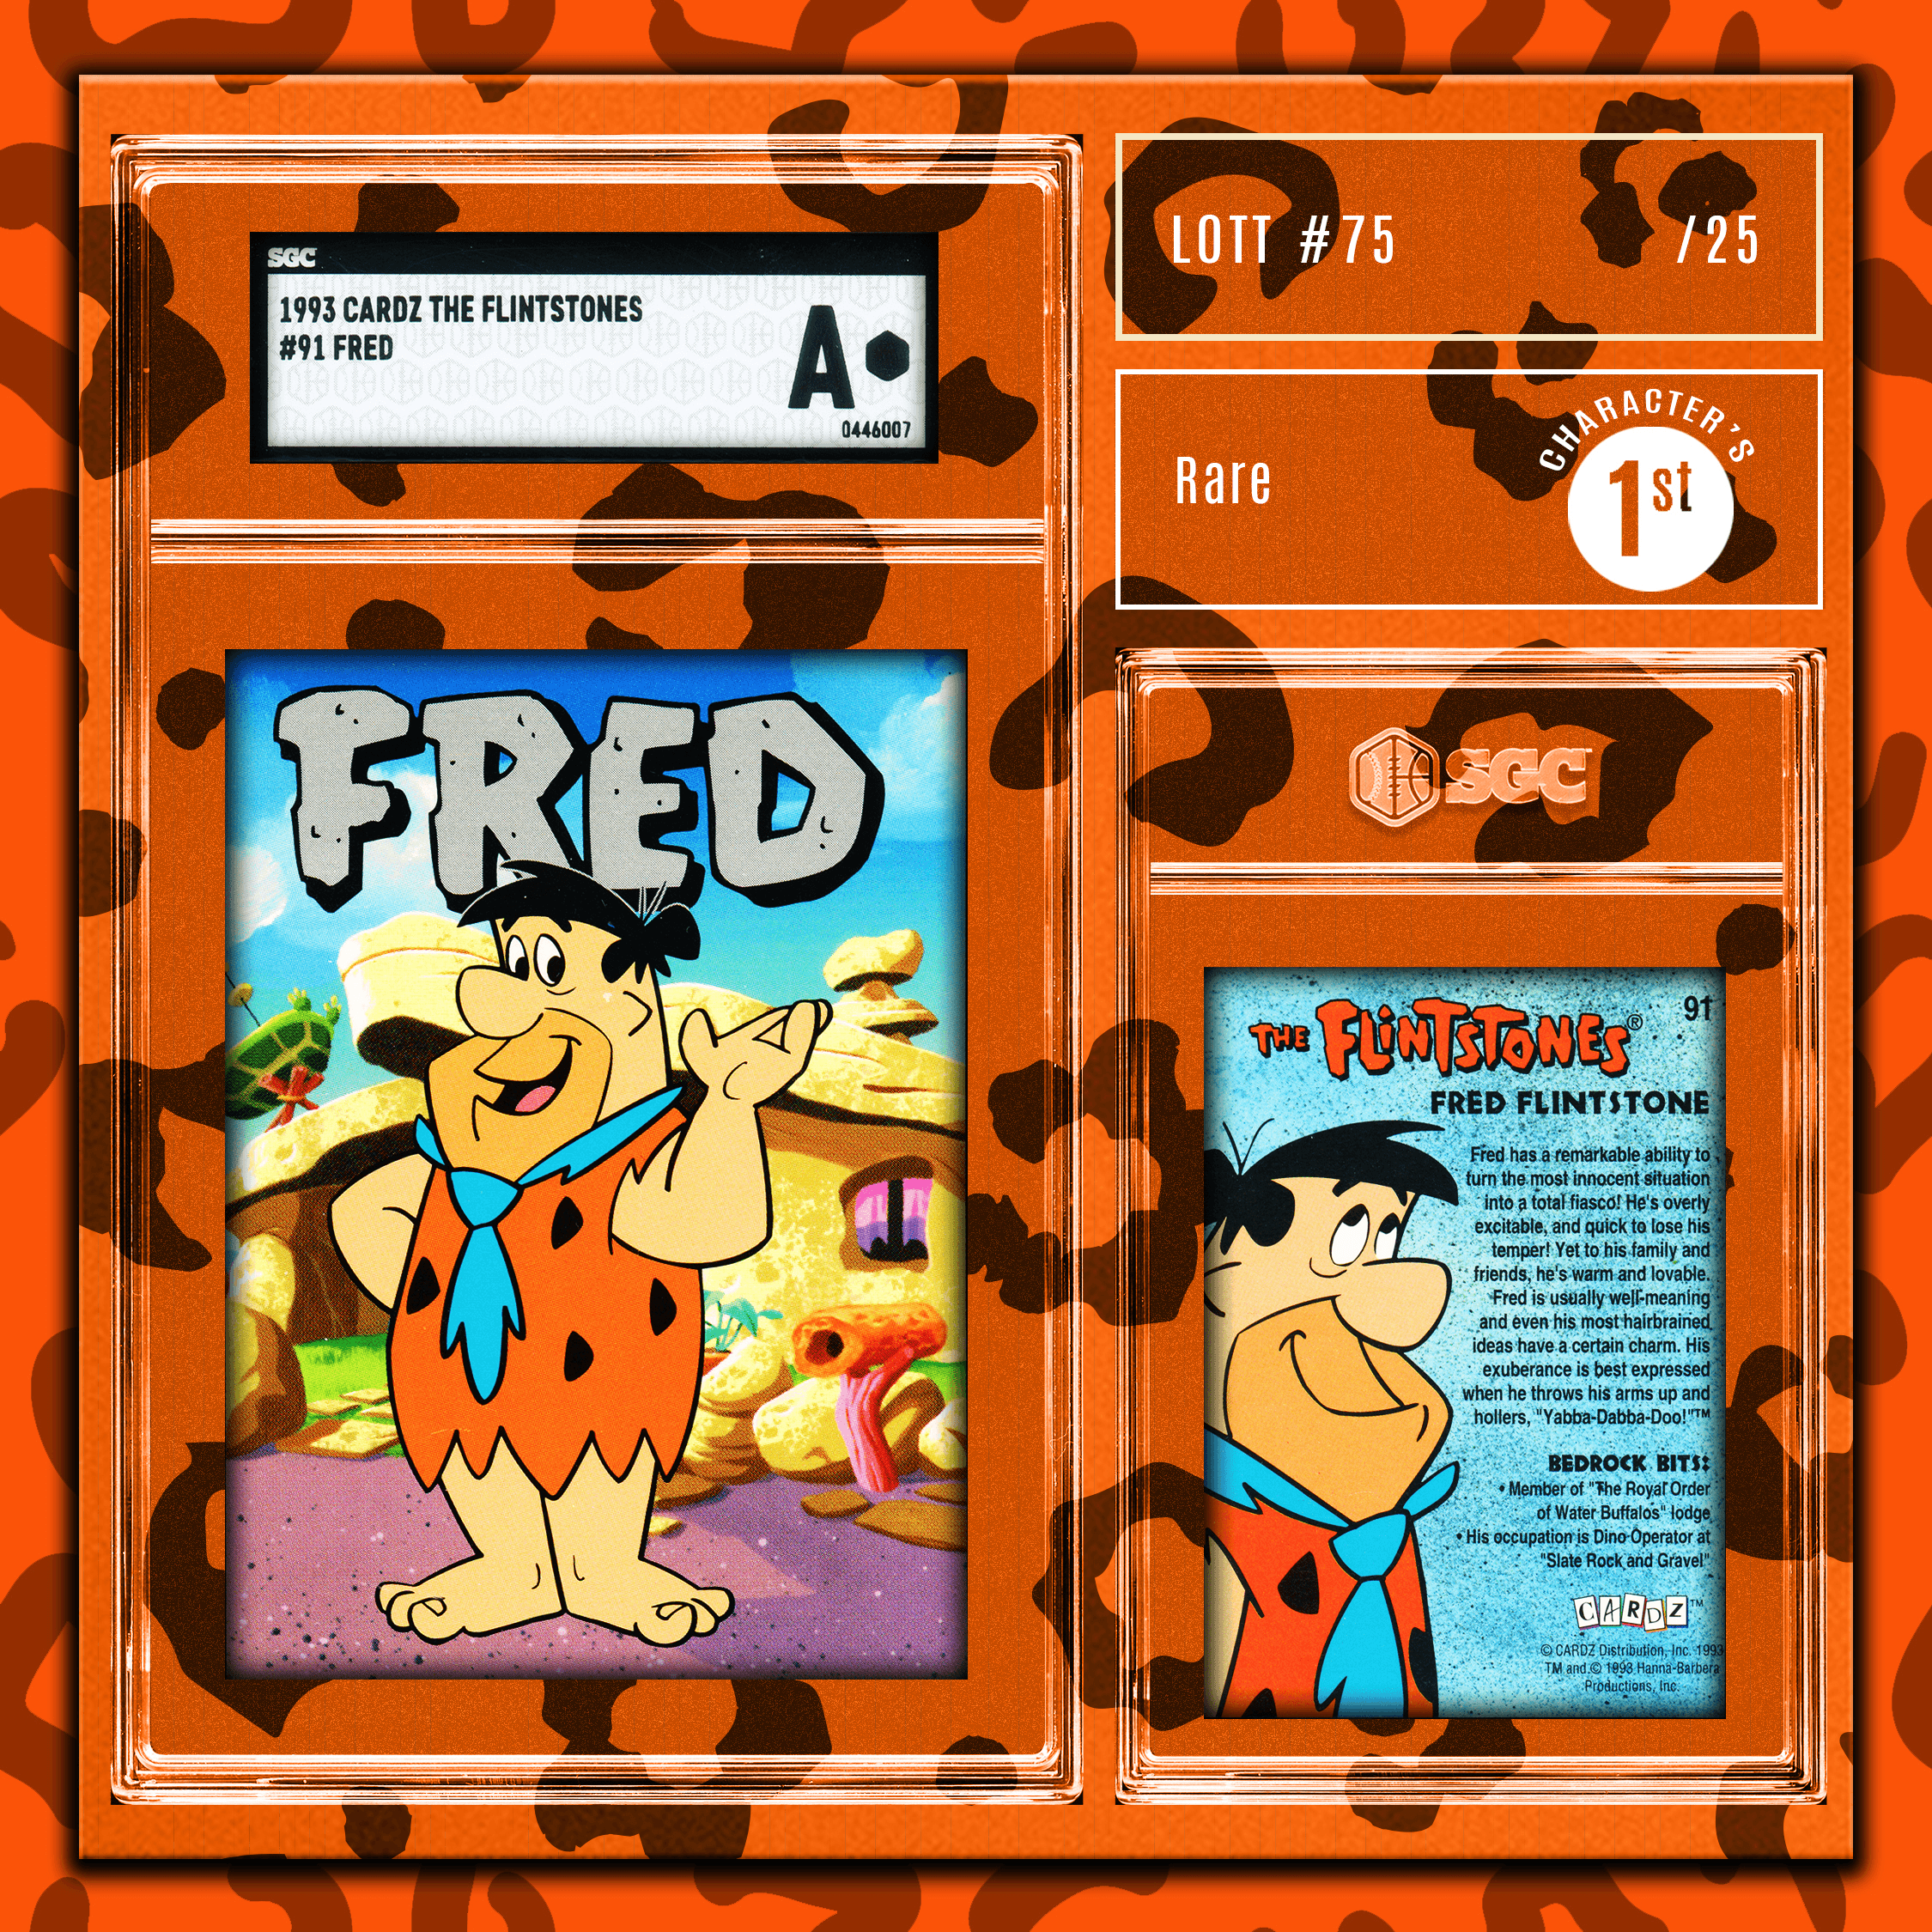 Fred Flintstone - (1993 Cardz - The Flintstones SGC A)